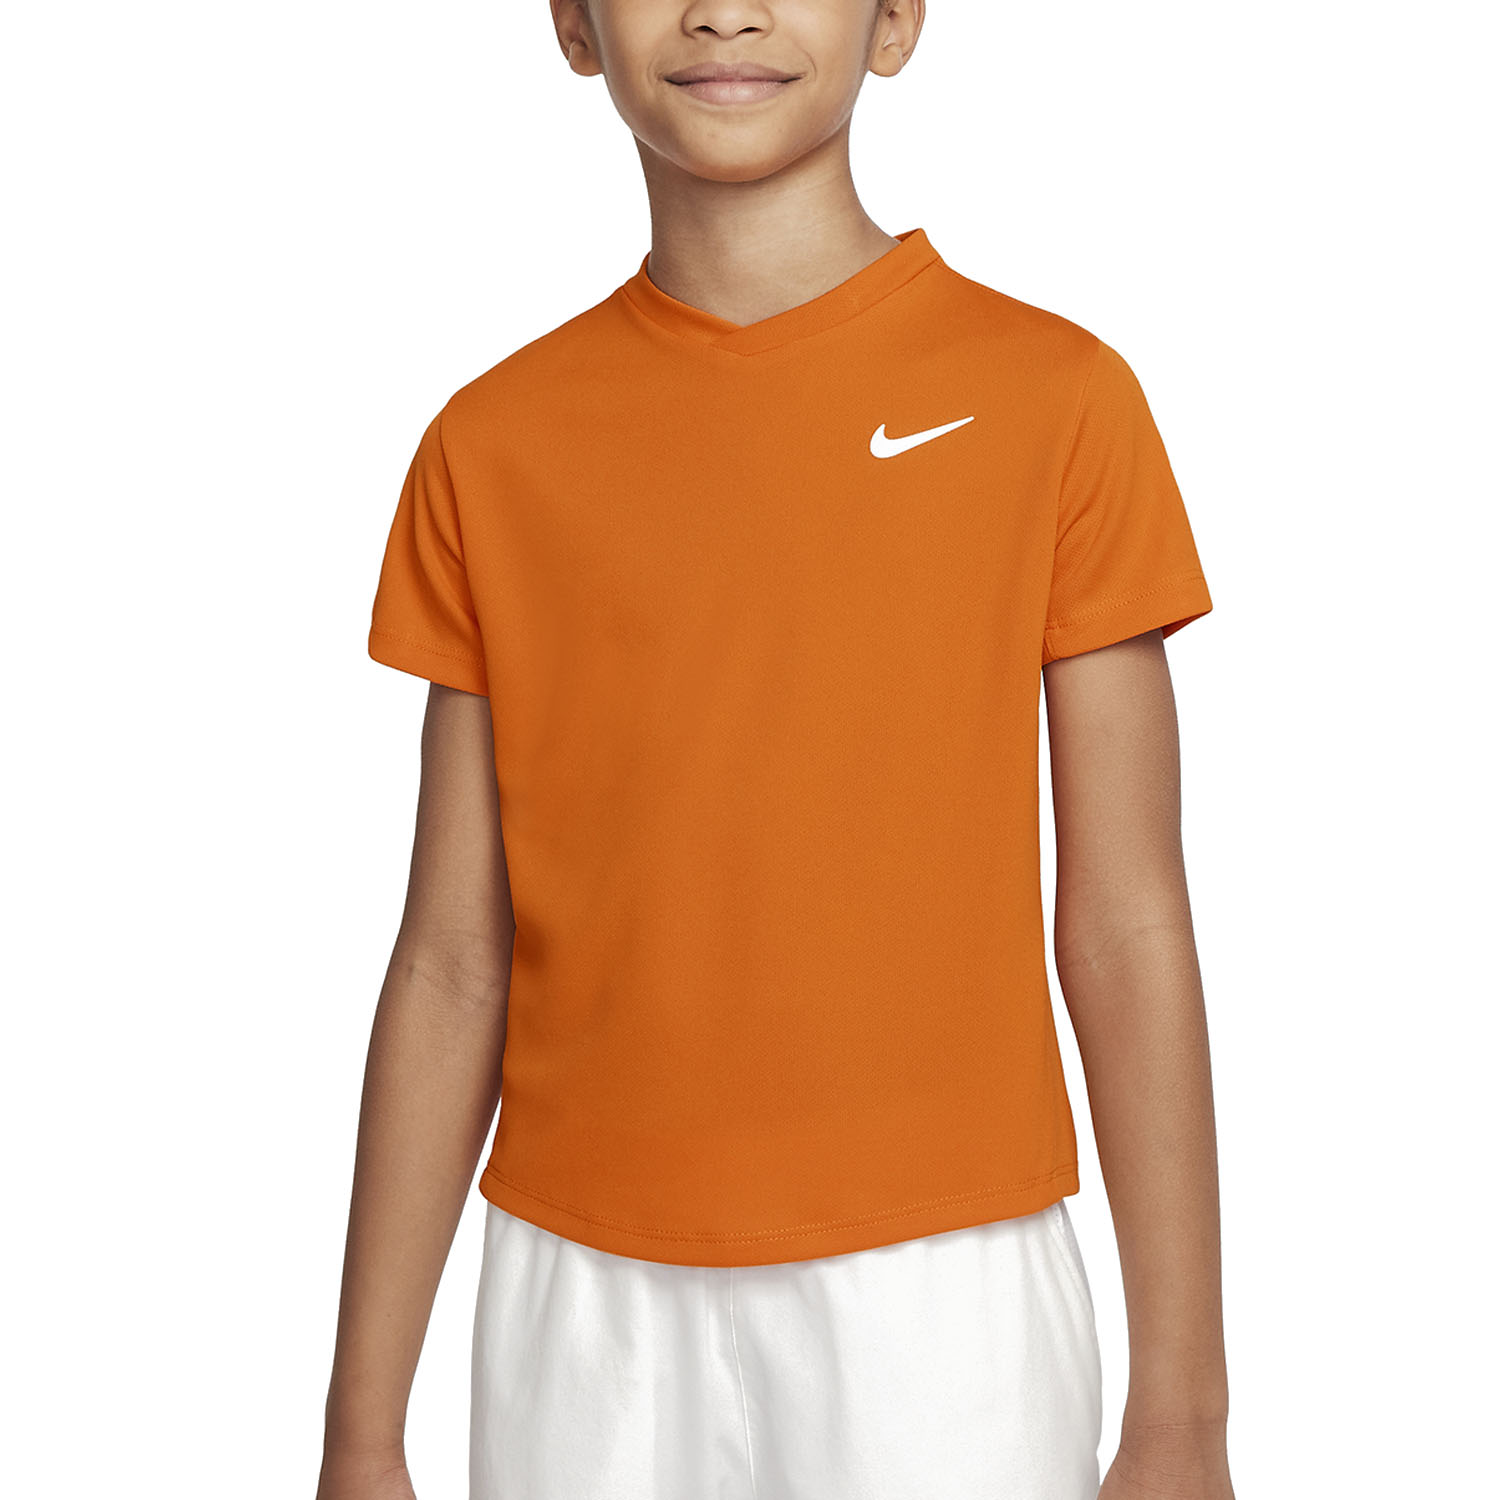 Orange Nike Shirt Boys | studytreasure.com